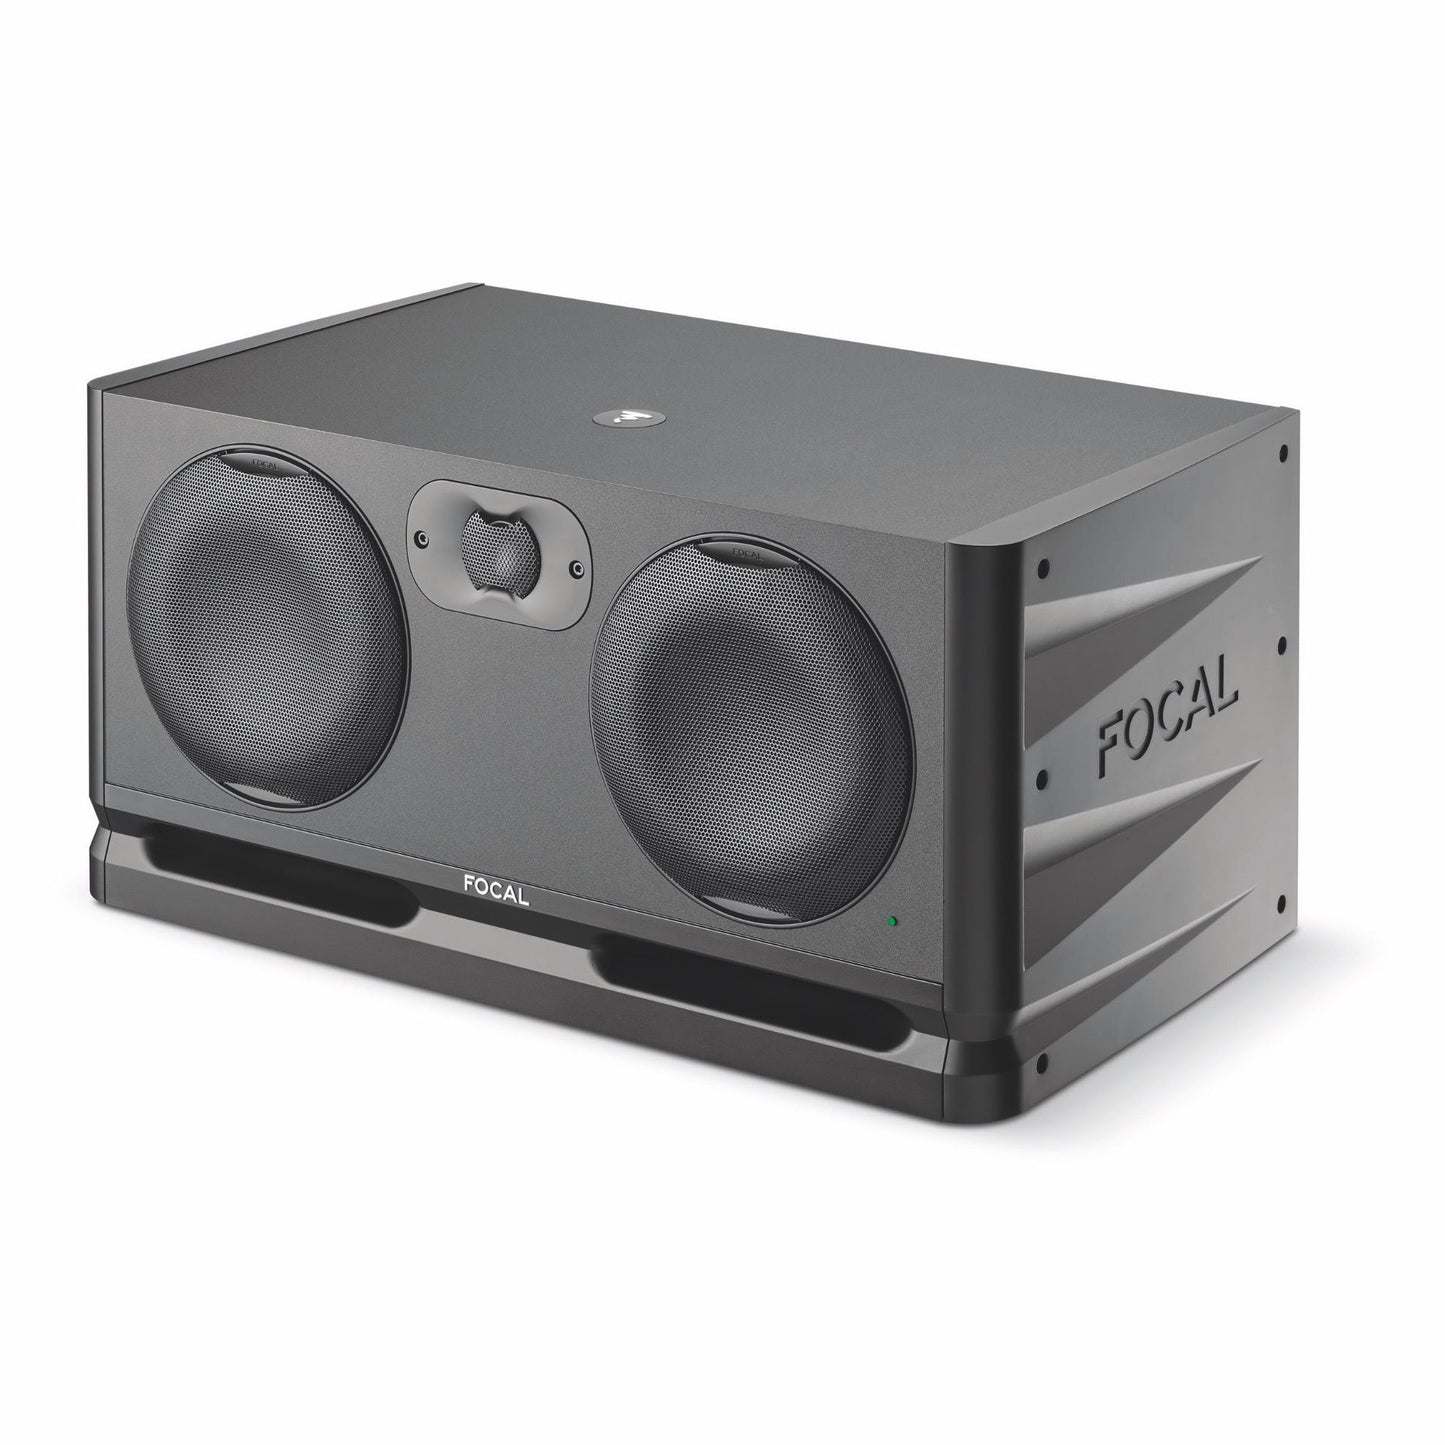 Focal Alpha Twin EVO 2x 6.5” Powered Studio Monitor